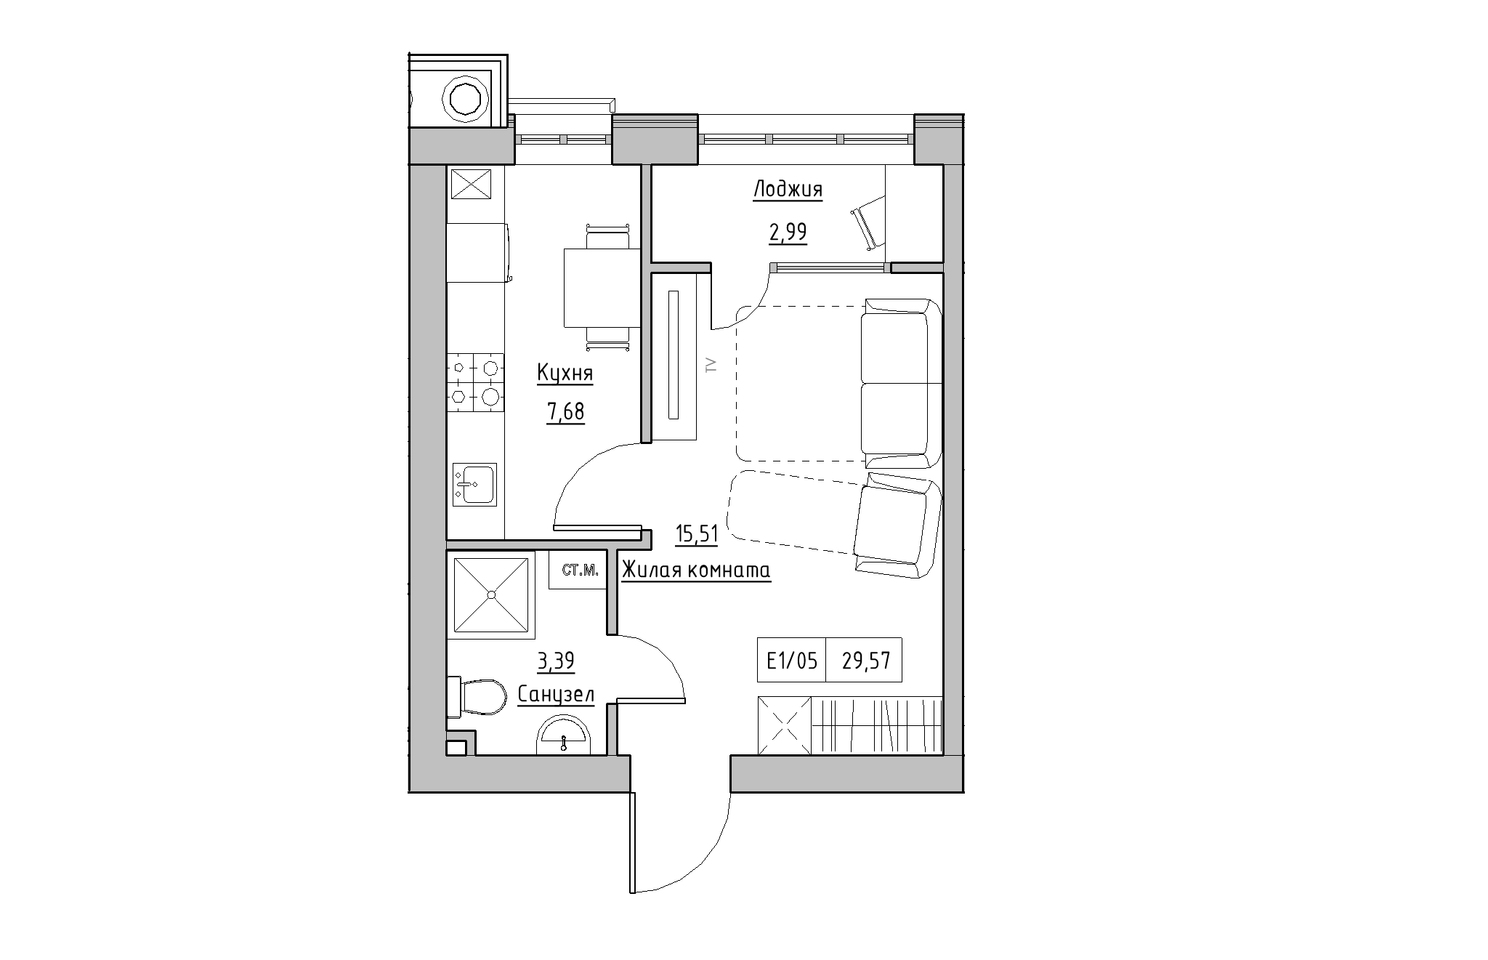 Planning 1-rm flats area 29.57m2, KS-010-03/0006.